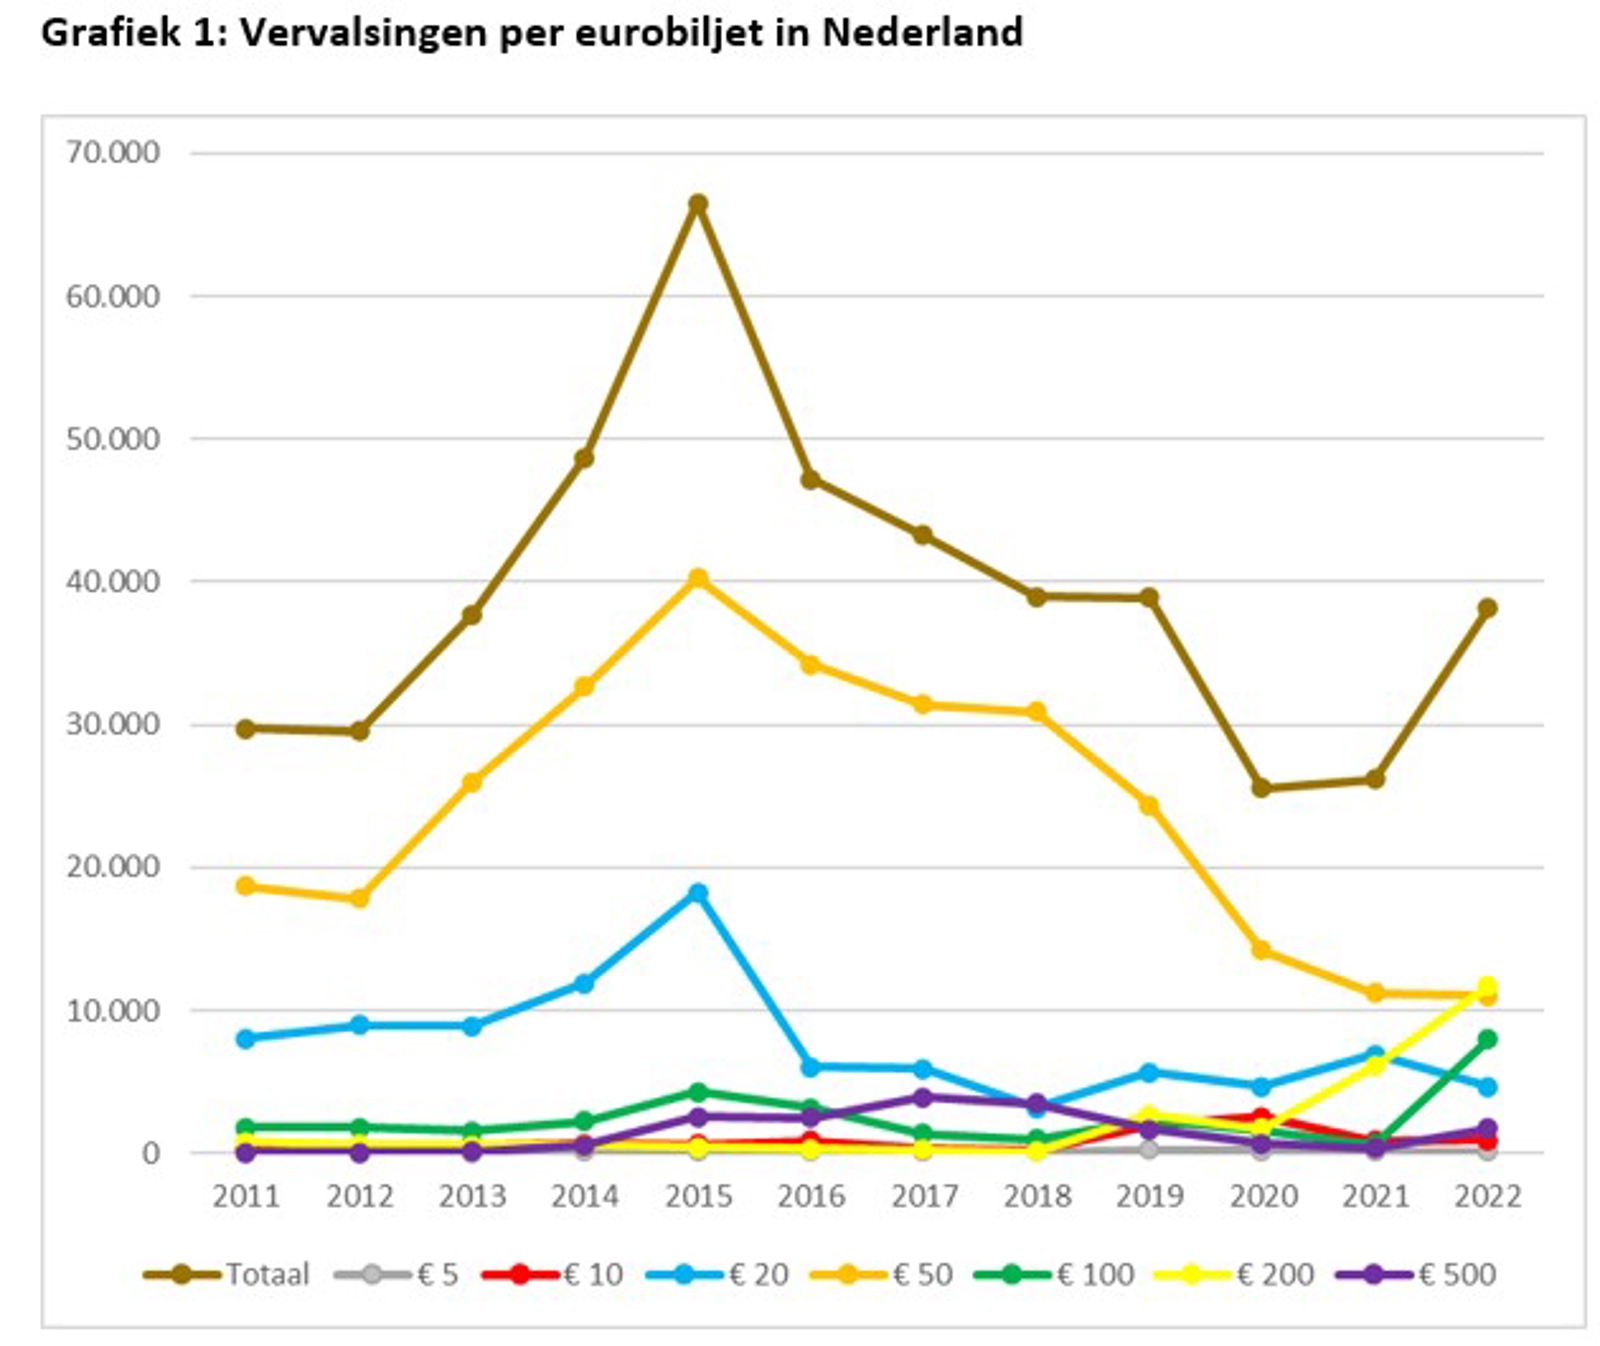 Vervalsingen per eurobiljet in Nederland